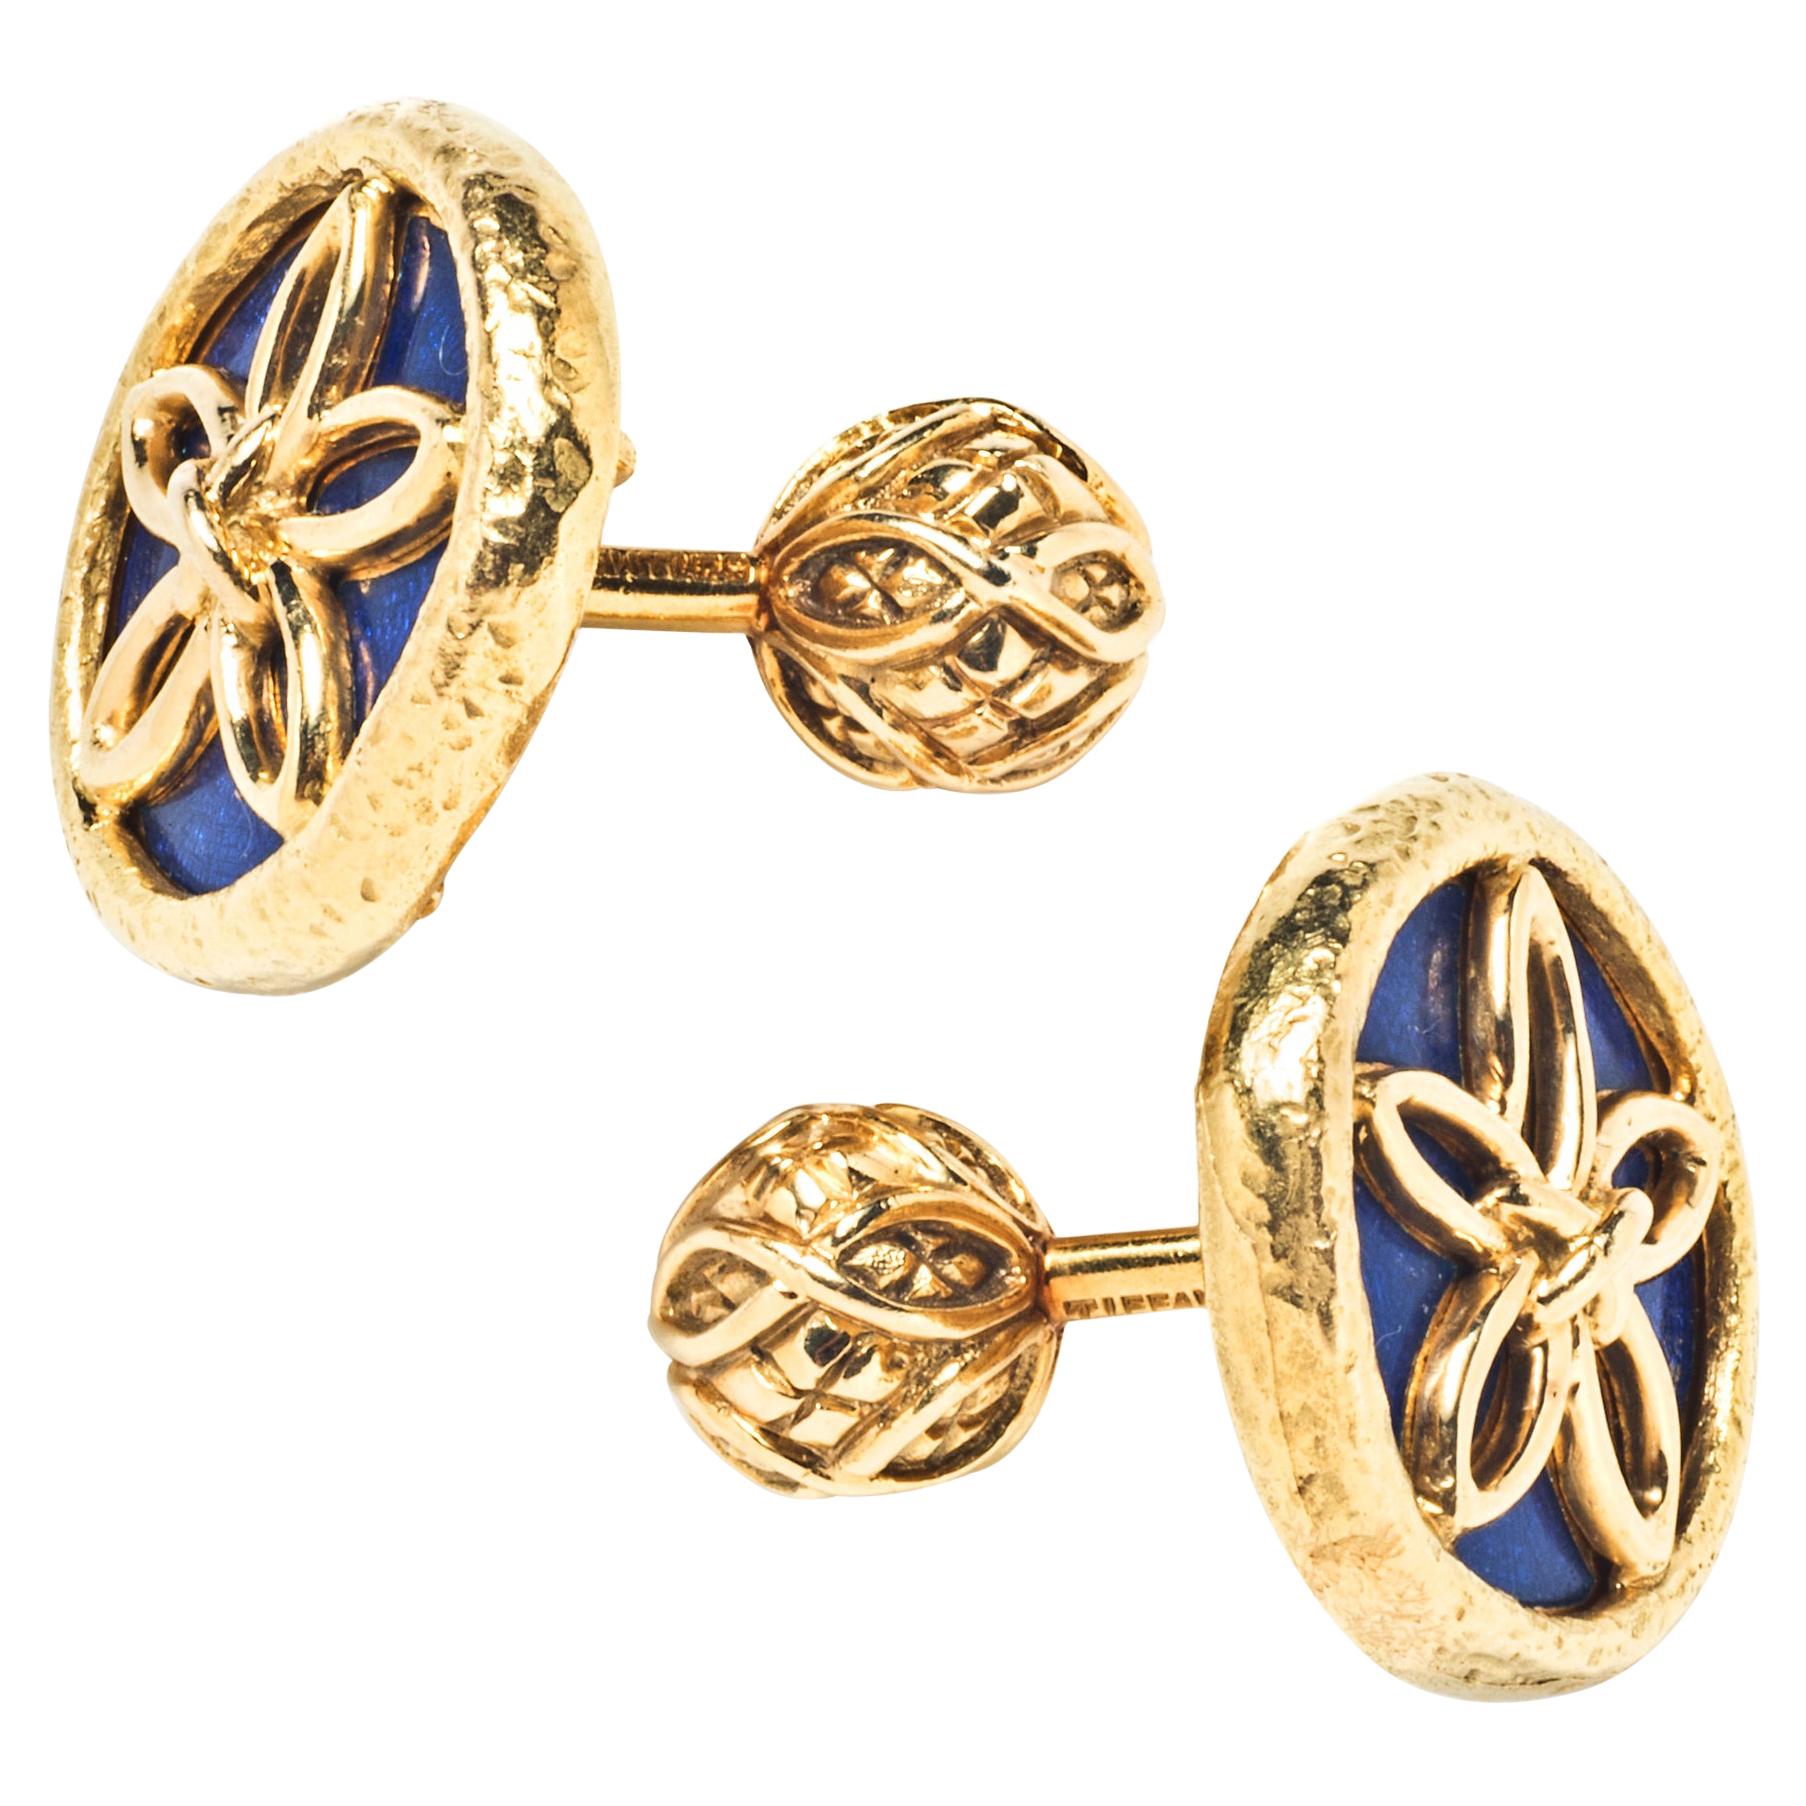 Schlumberger for Tiffany & Co. 18k Gold & Lapis Sand Dollar Cufflinks